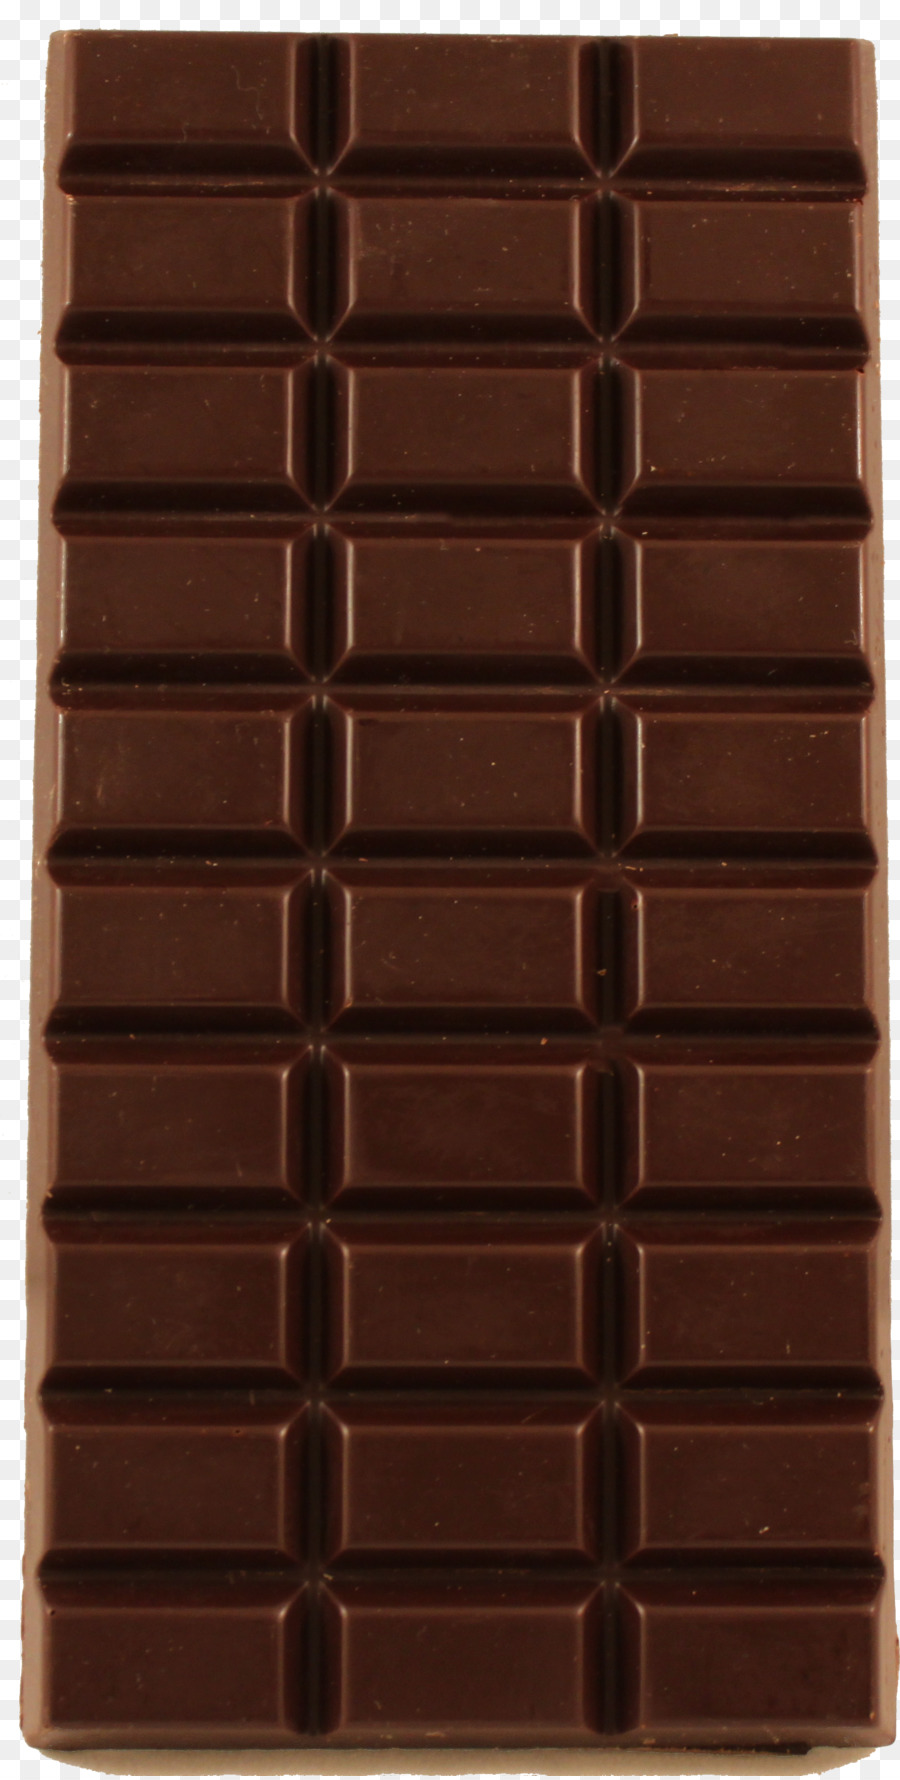 Chocolate bar schokoriegel Milk chocolate Cocoa solids - Schokolade